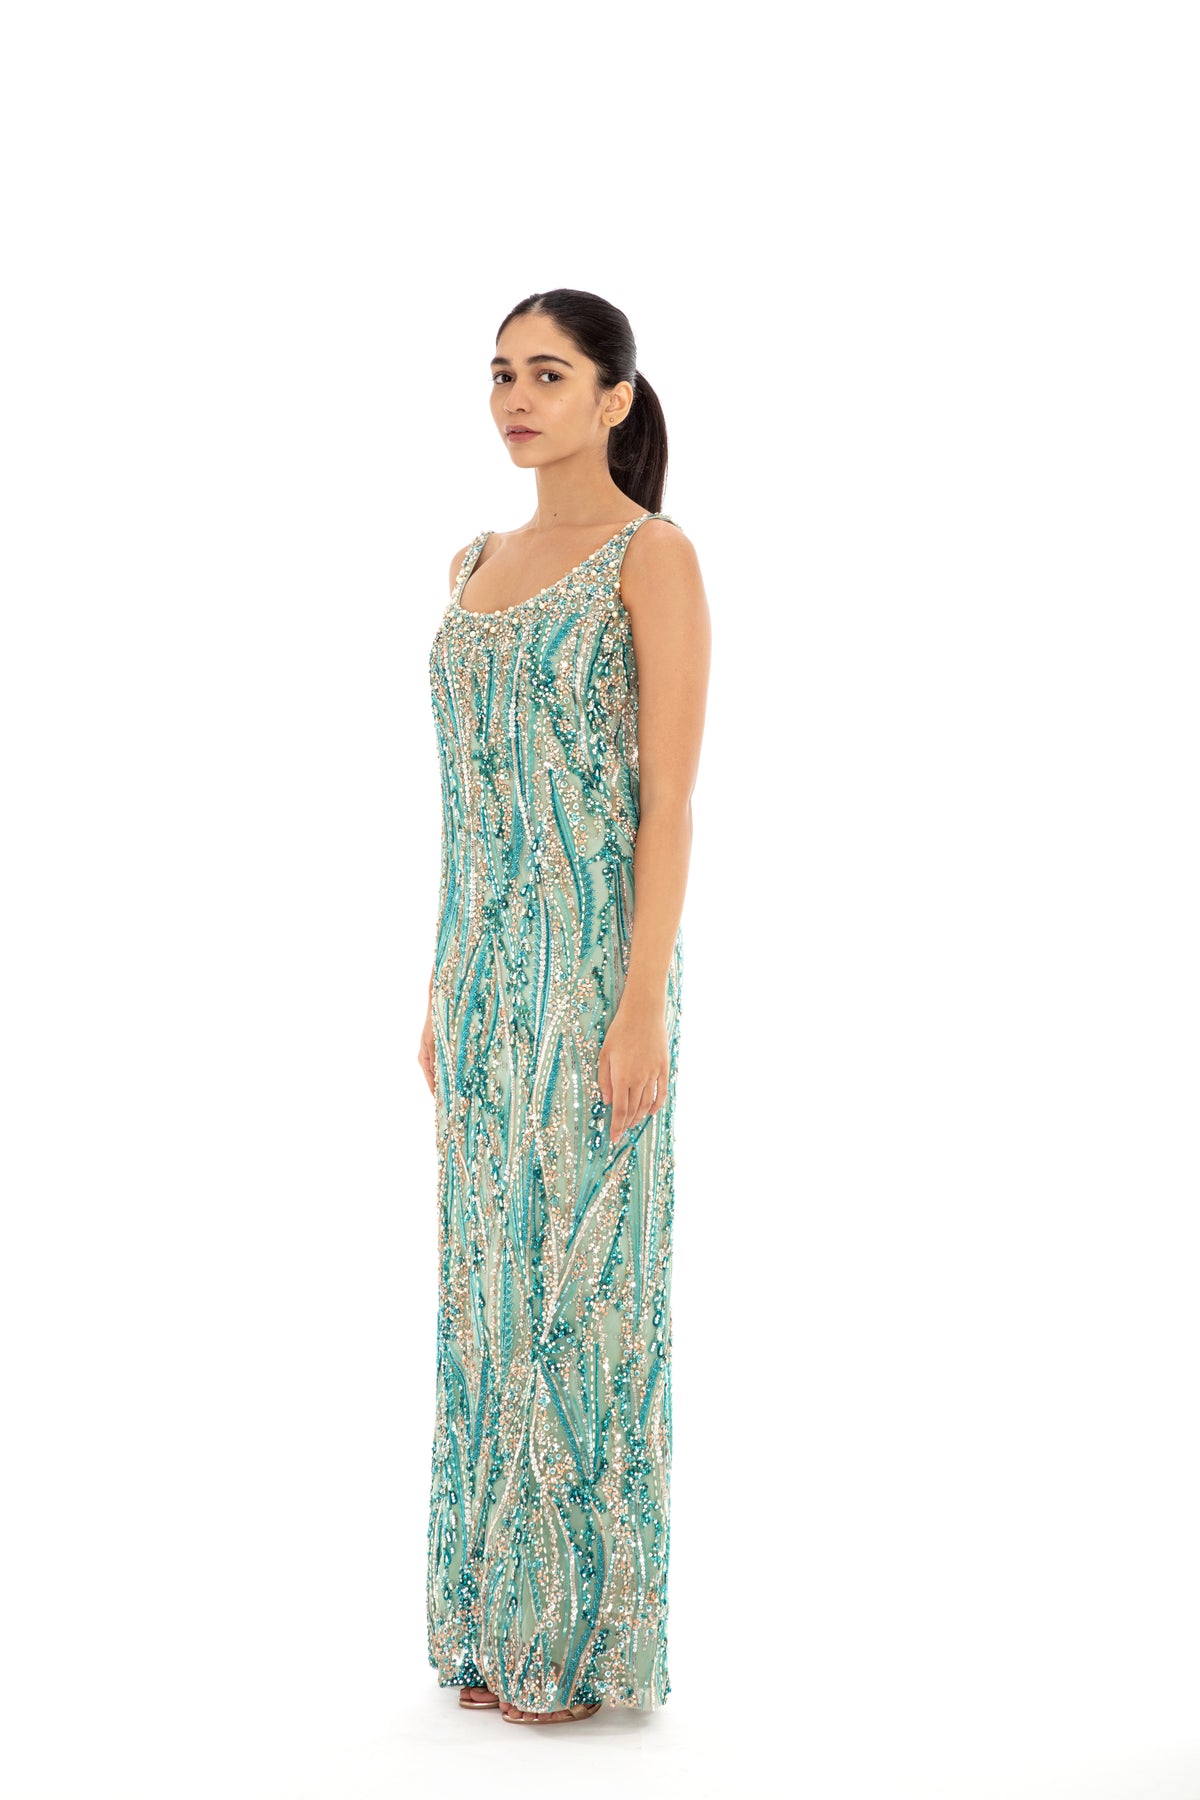 Aqua beaded long gown